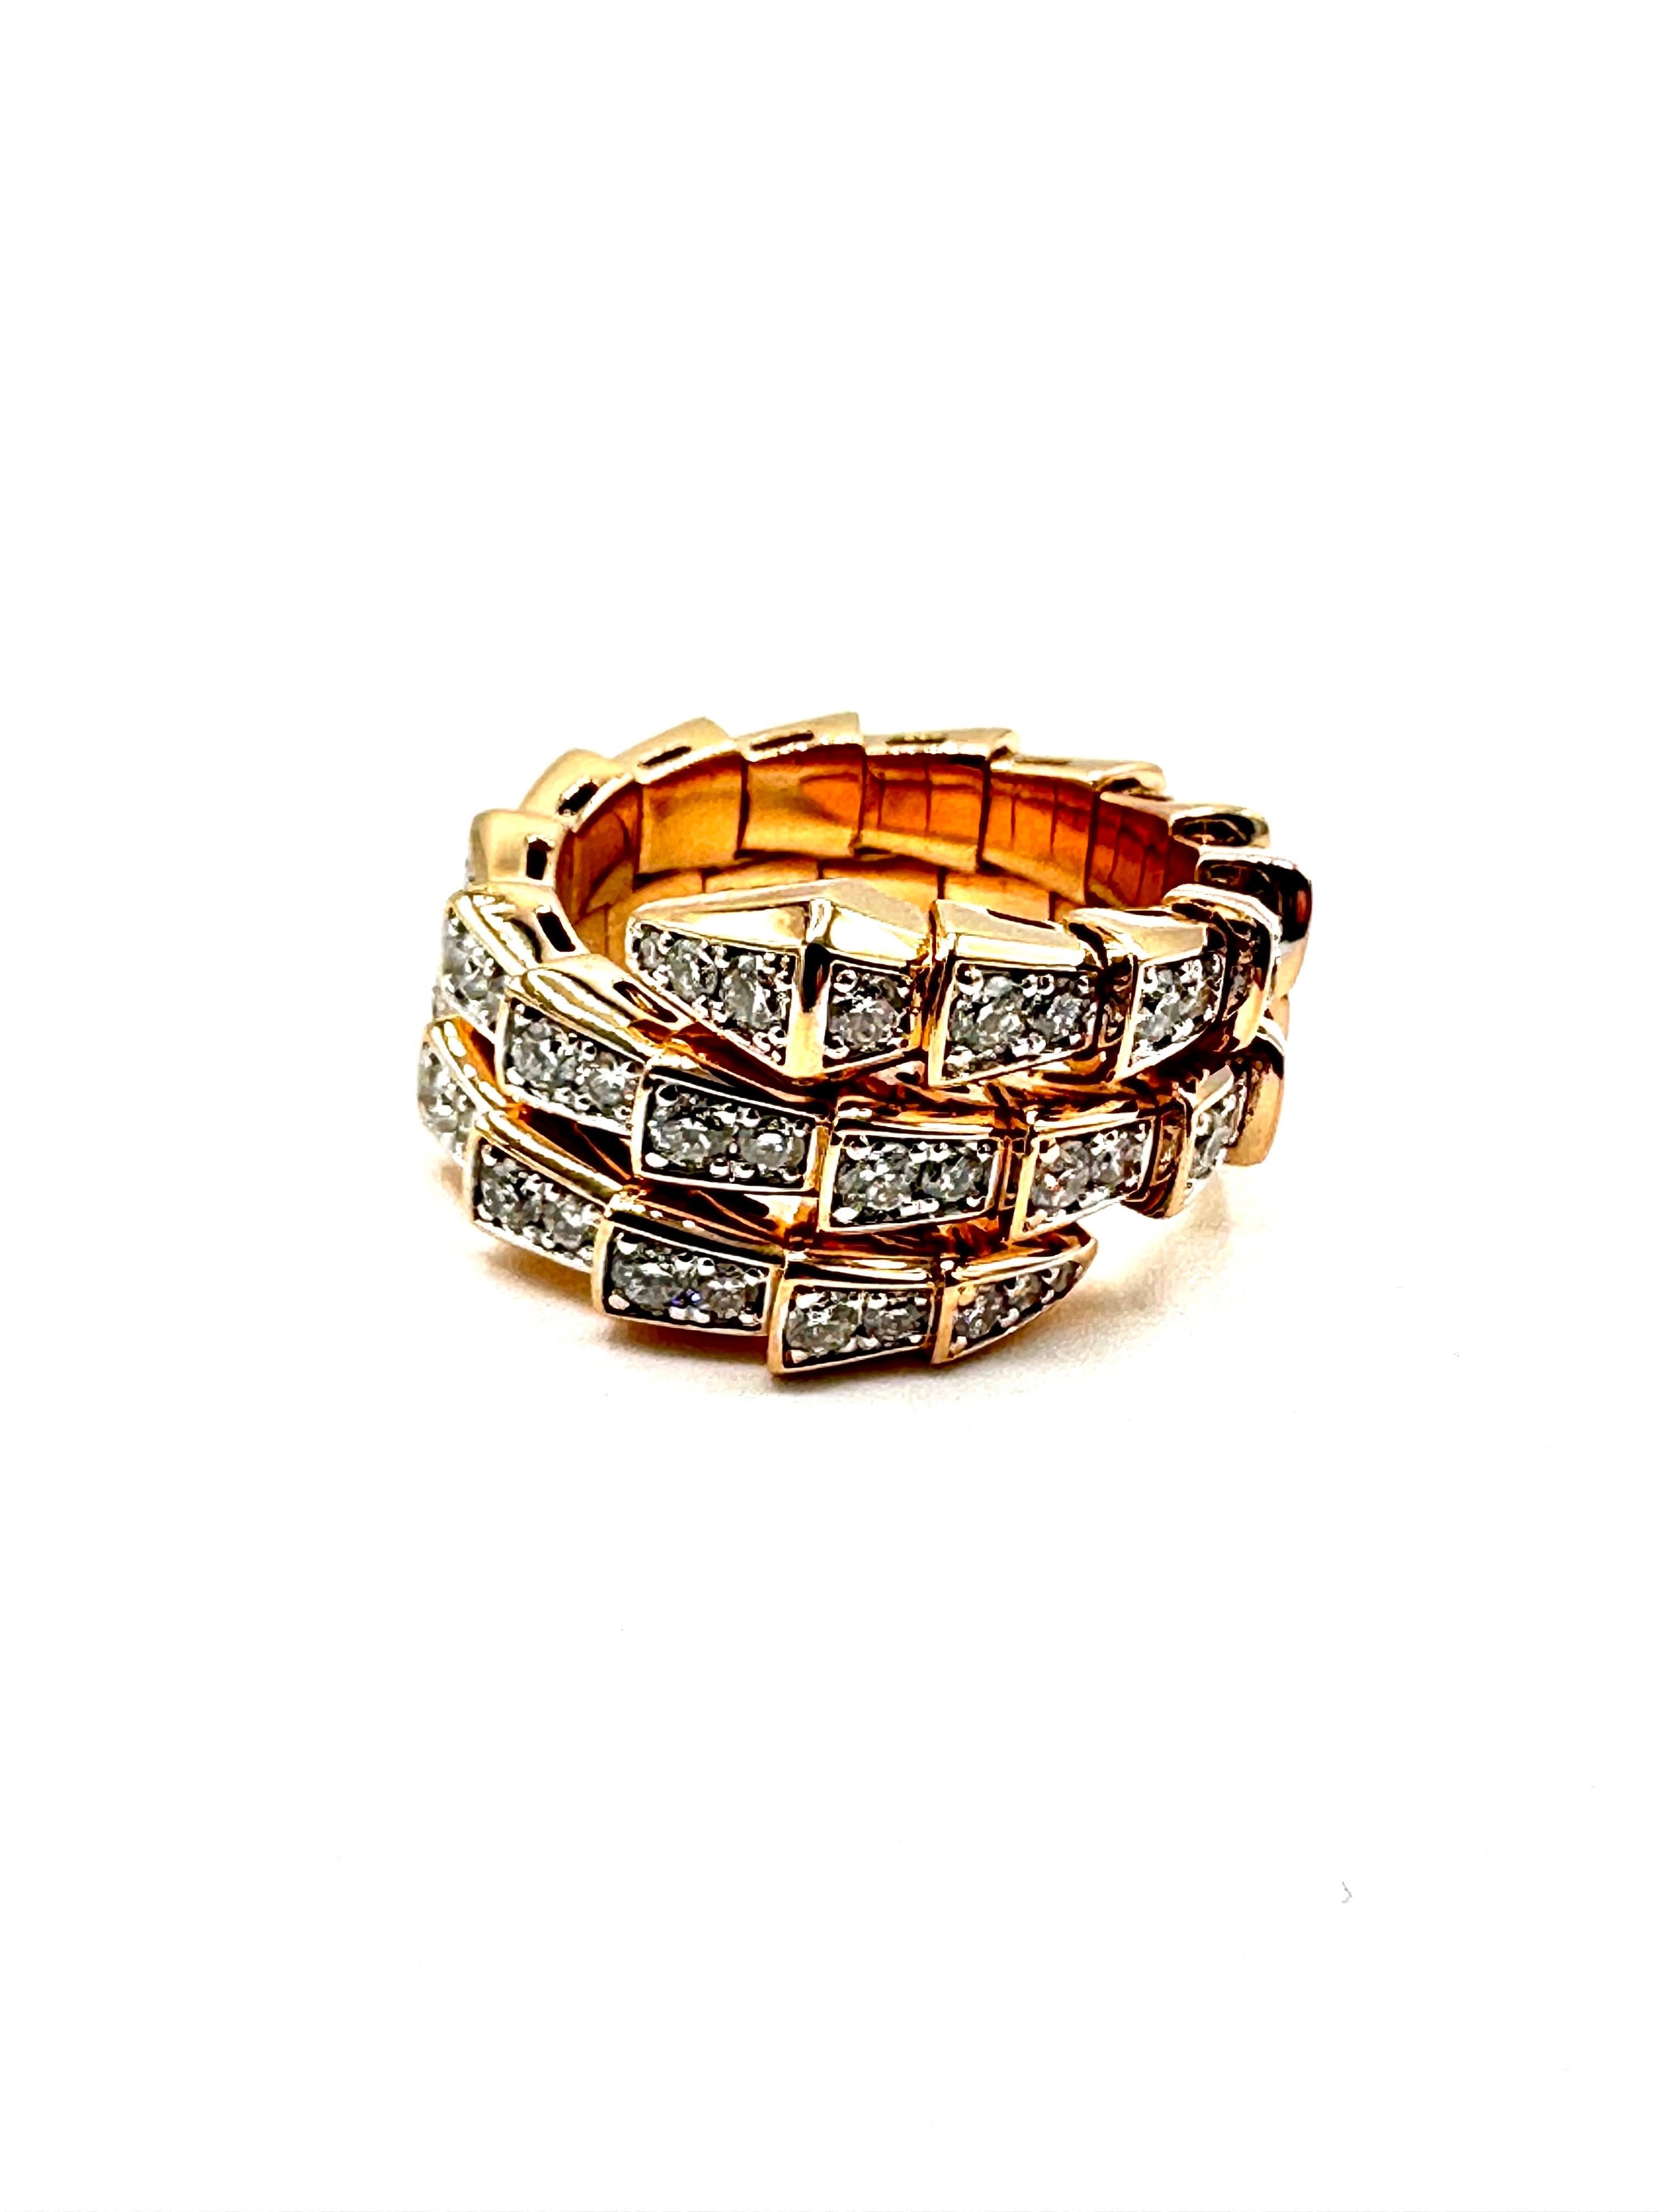 Modern 1.64 Carat Bulgari Serpenti Viper Two Coil Ring in 18K Rose Gold For Sale